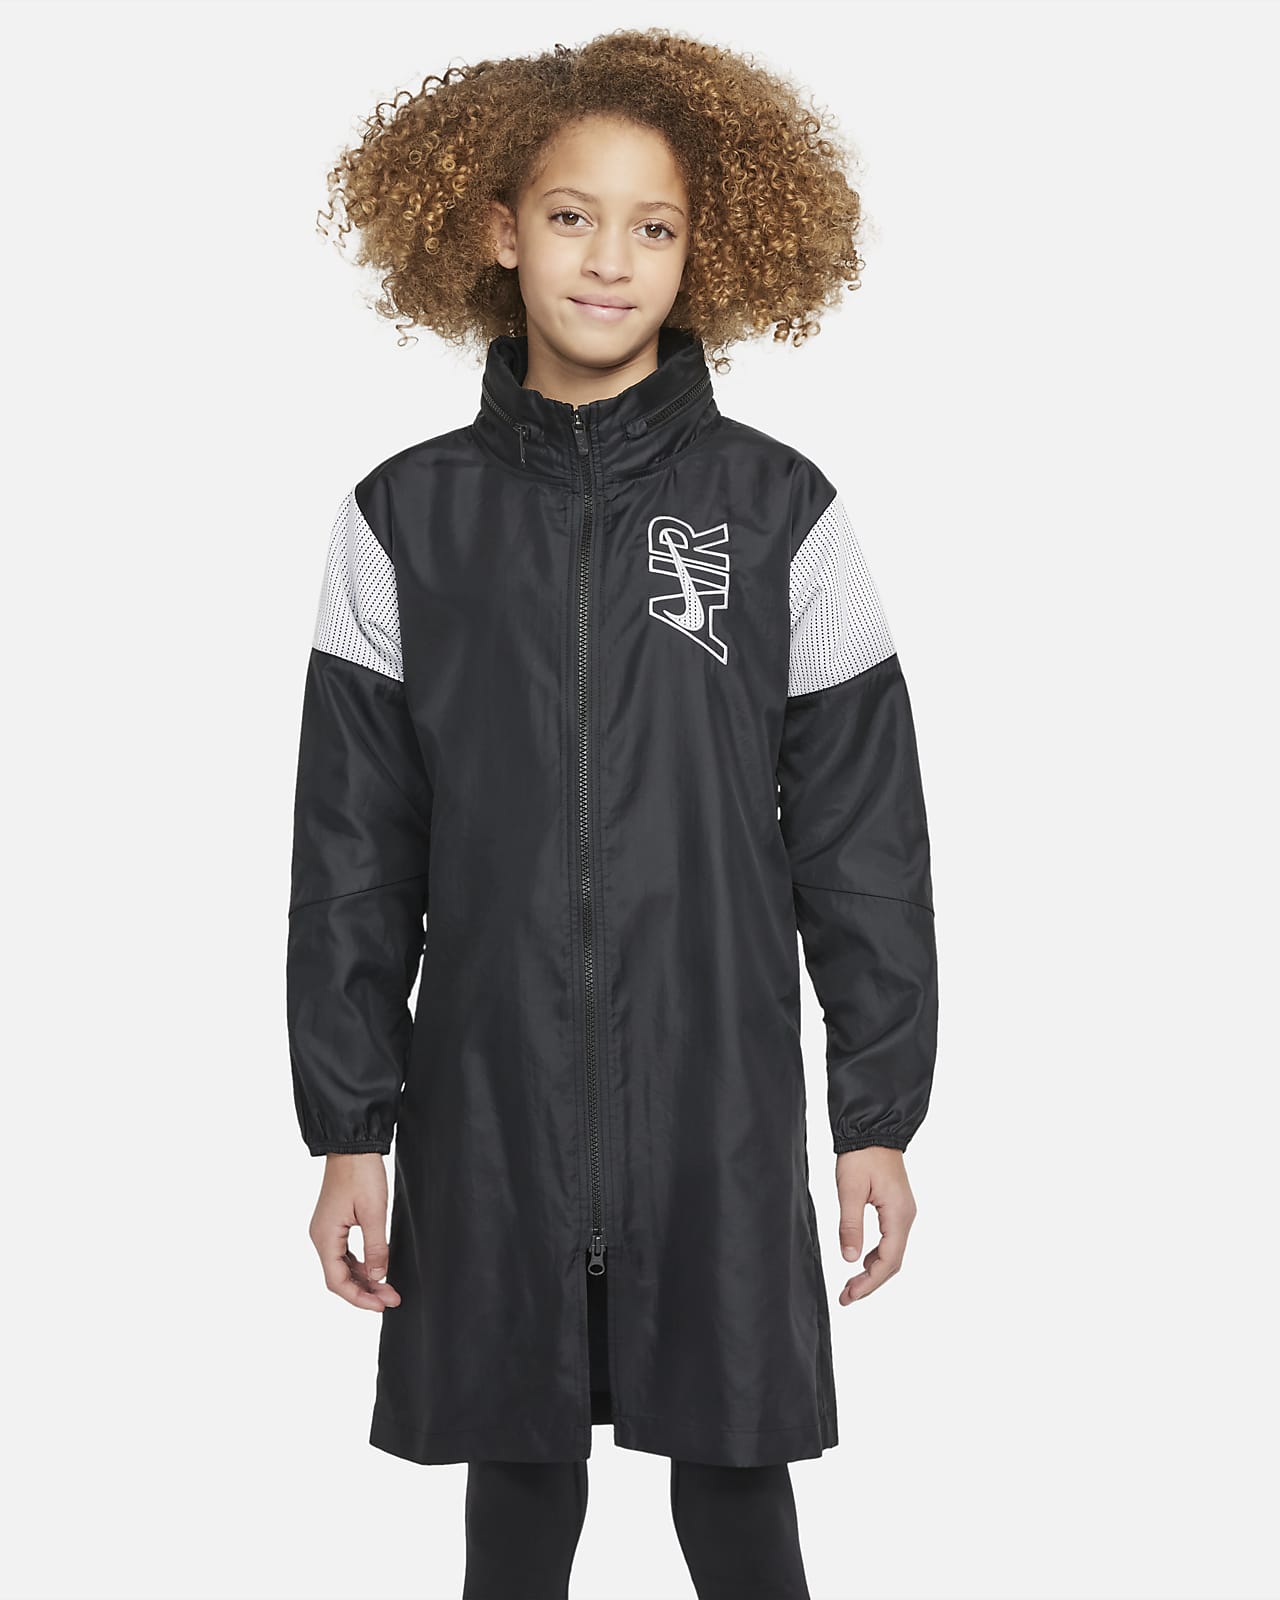 Nike Air Older Kids' (Girls') Woven Hooded Jacket